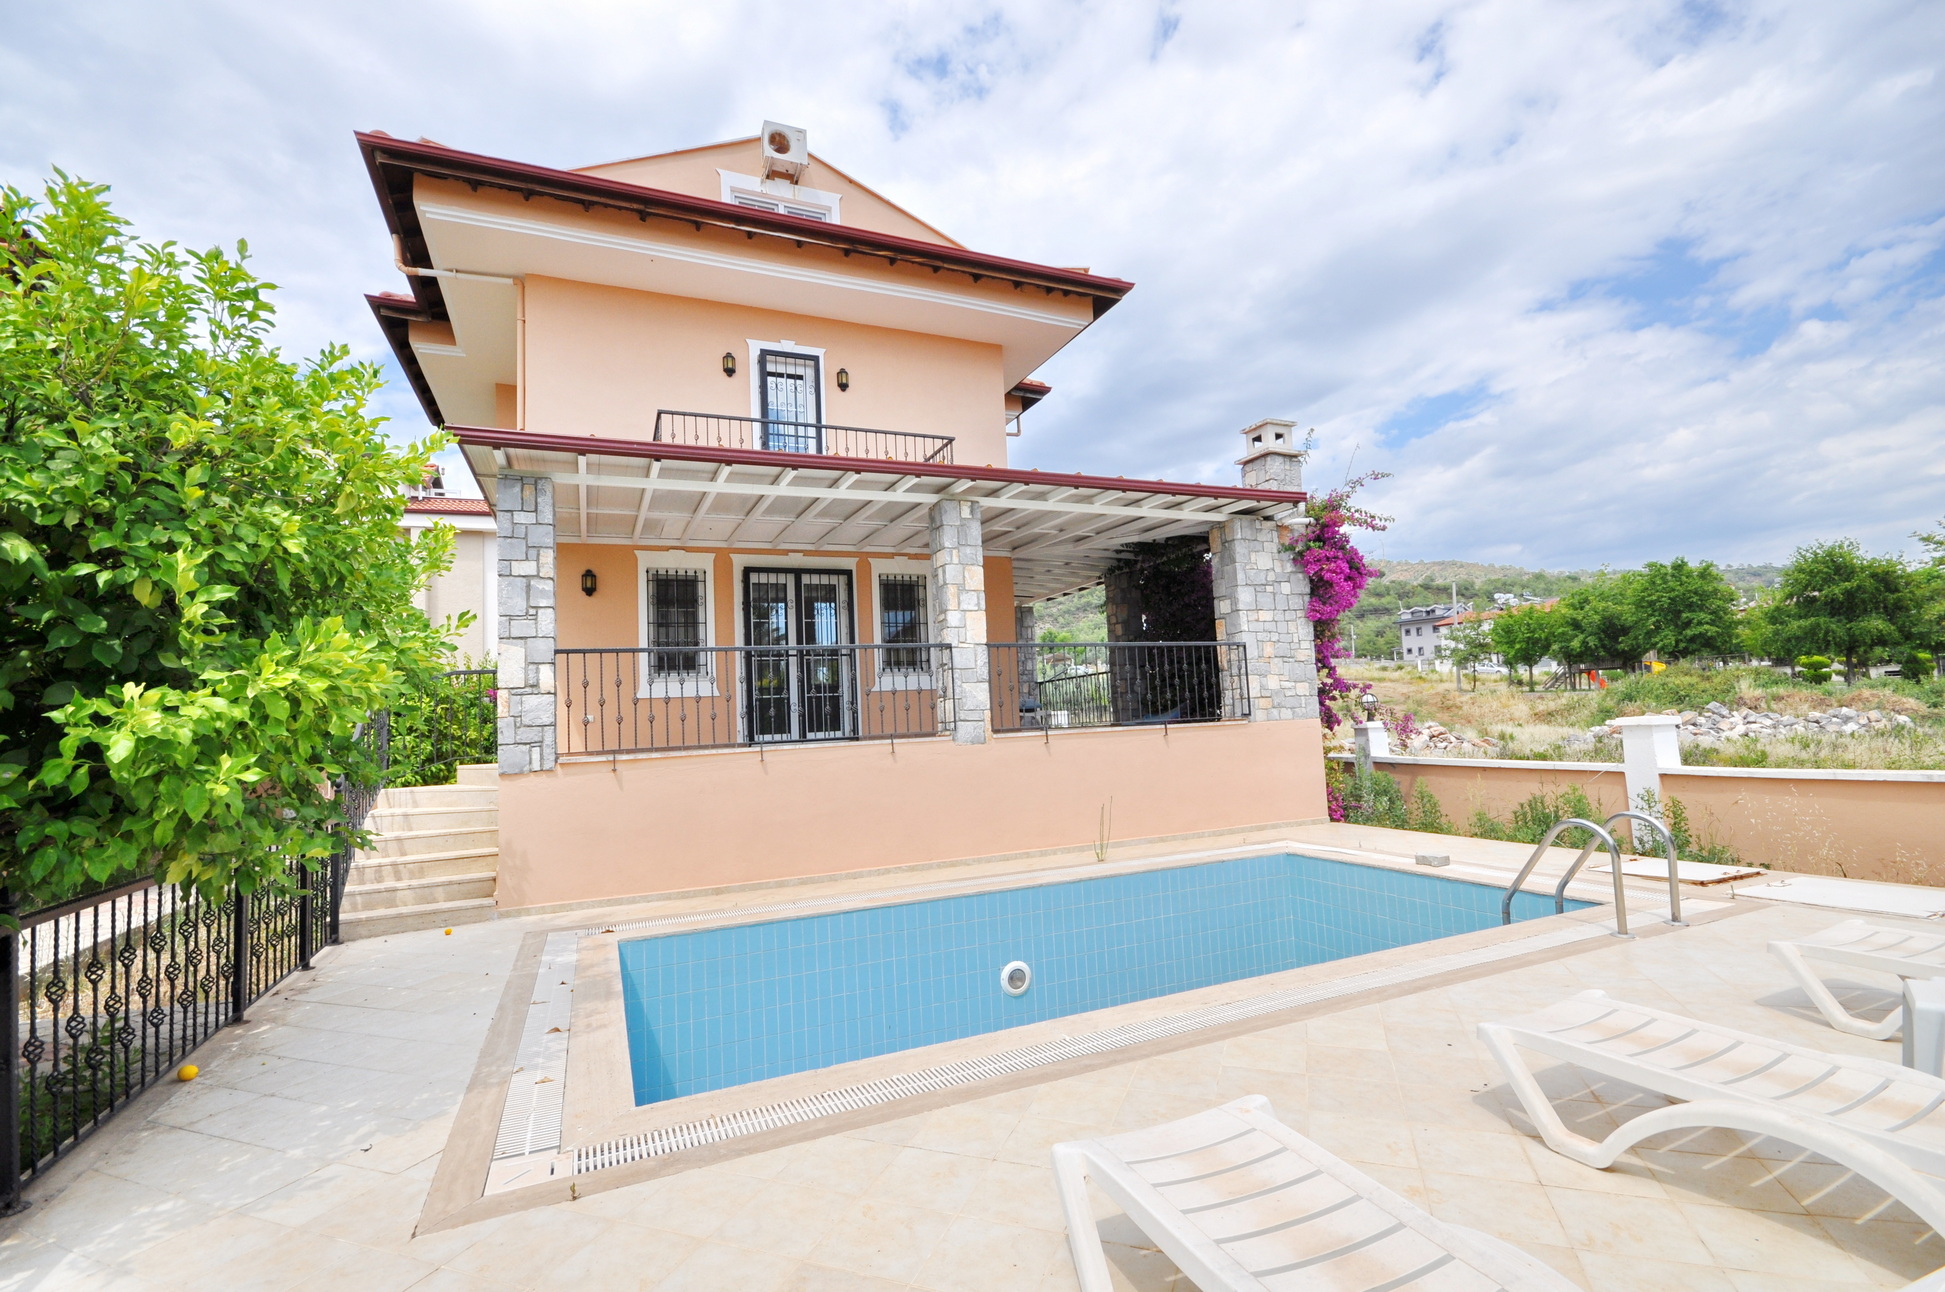 SOLD!!!3 Bedroom Detached Villa with Private Garden & Pool in Ciftlik